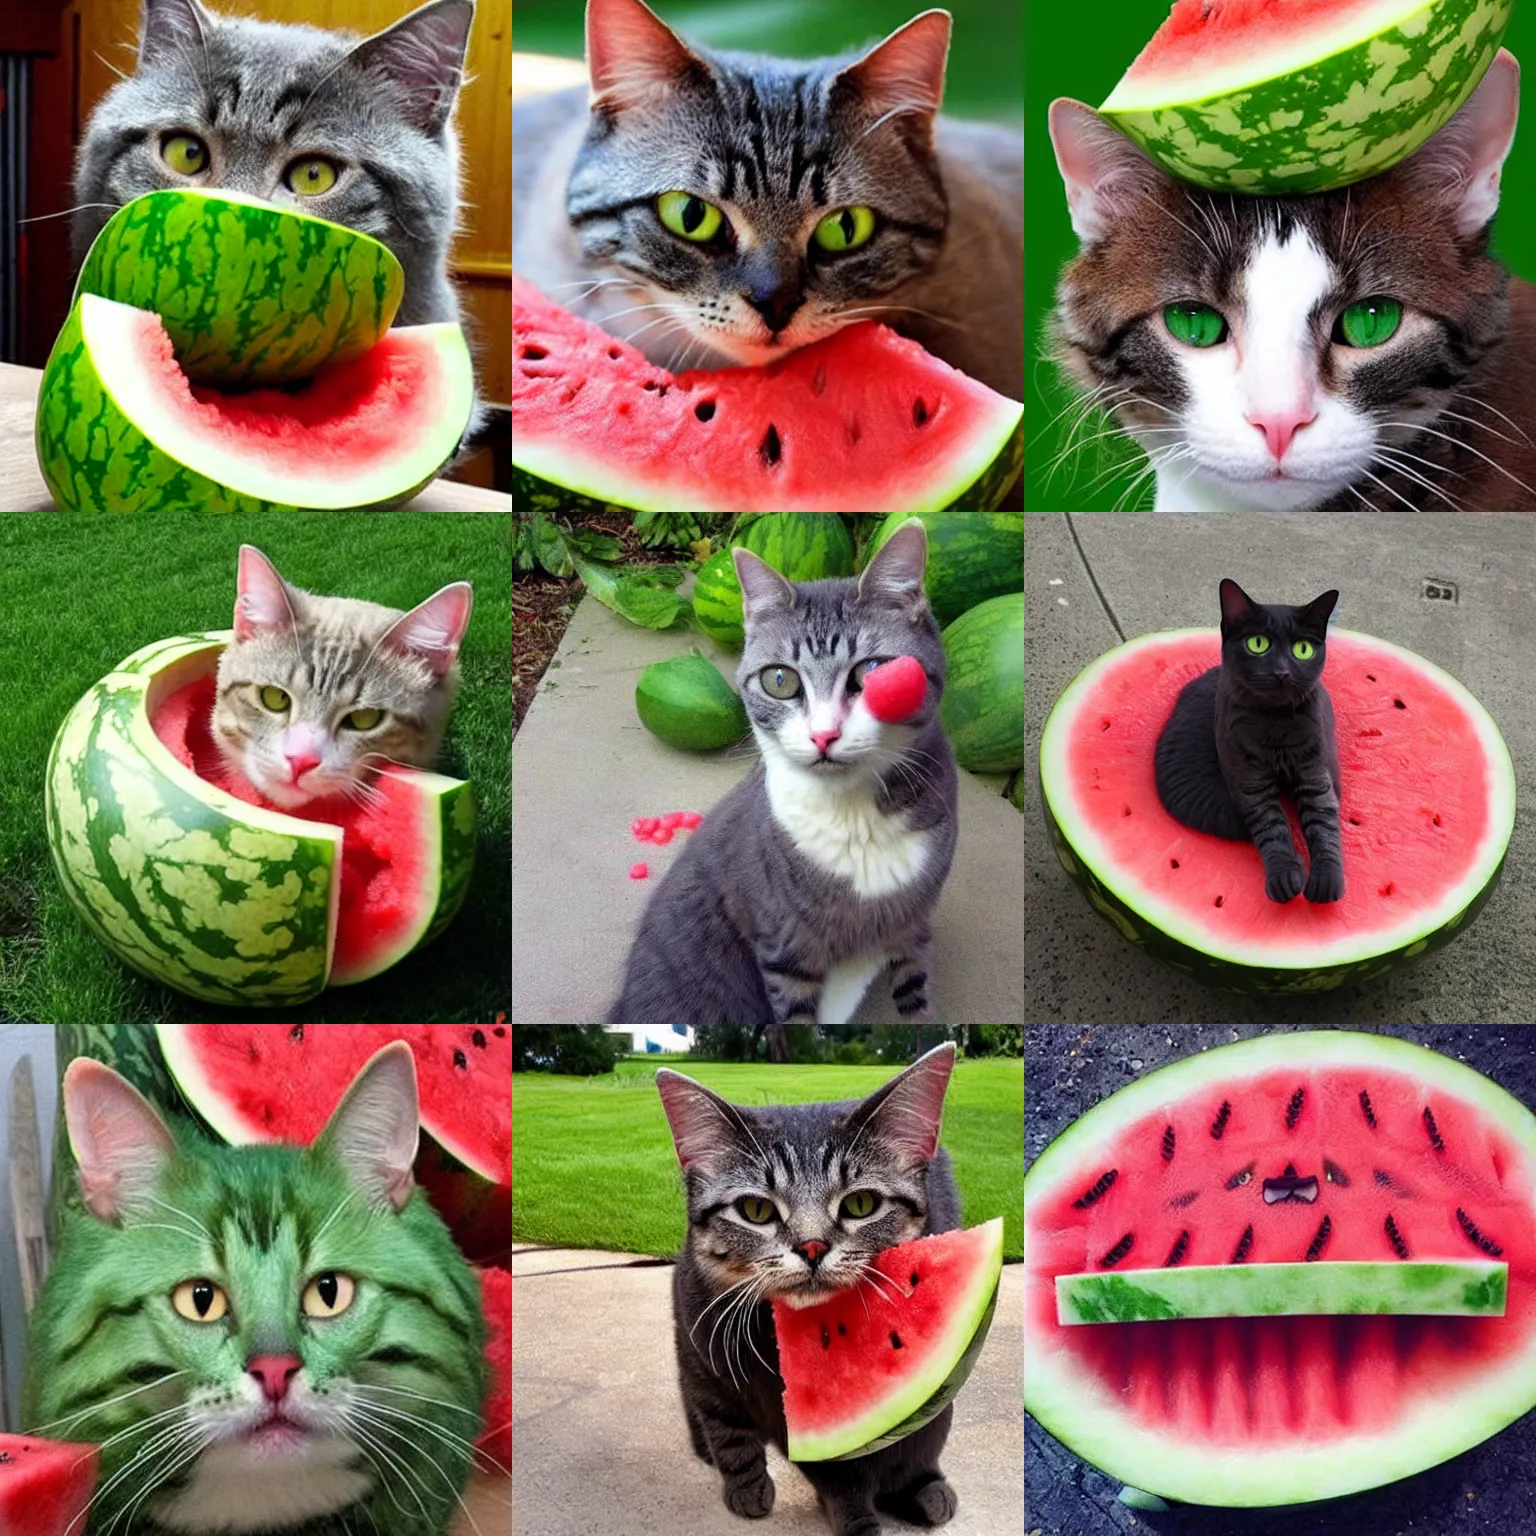 Prompt: watermelon cat hybrid